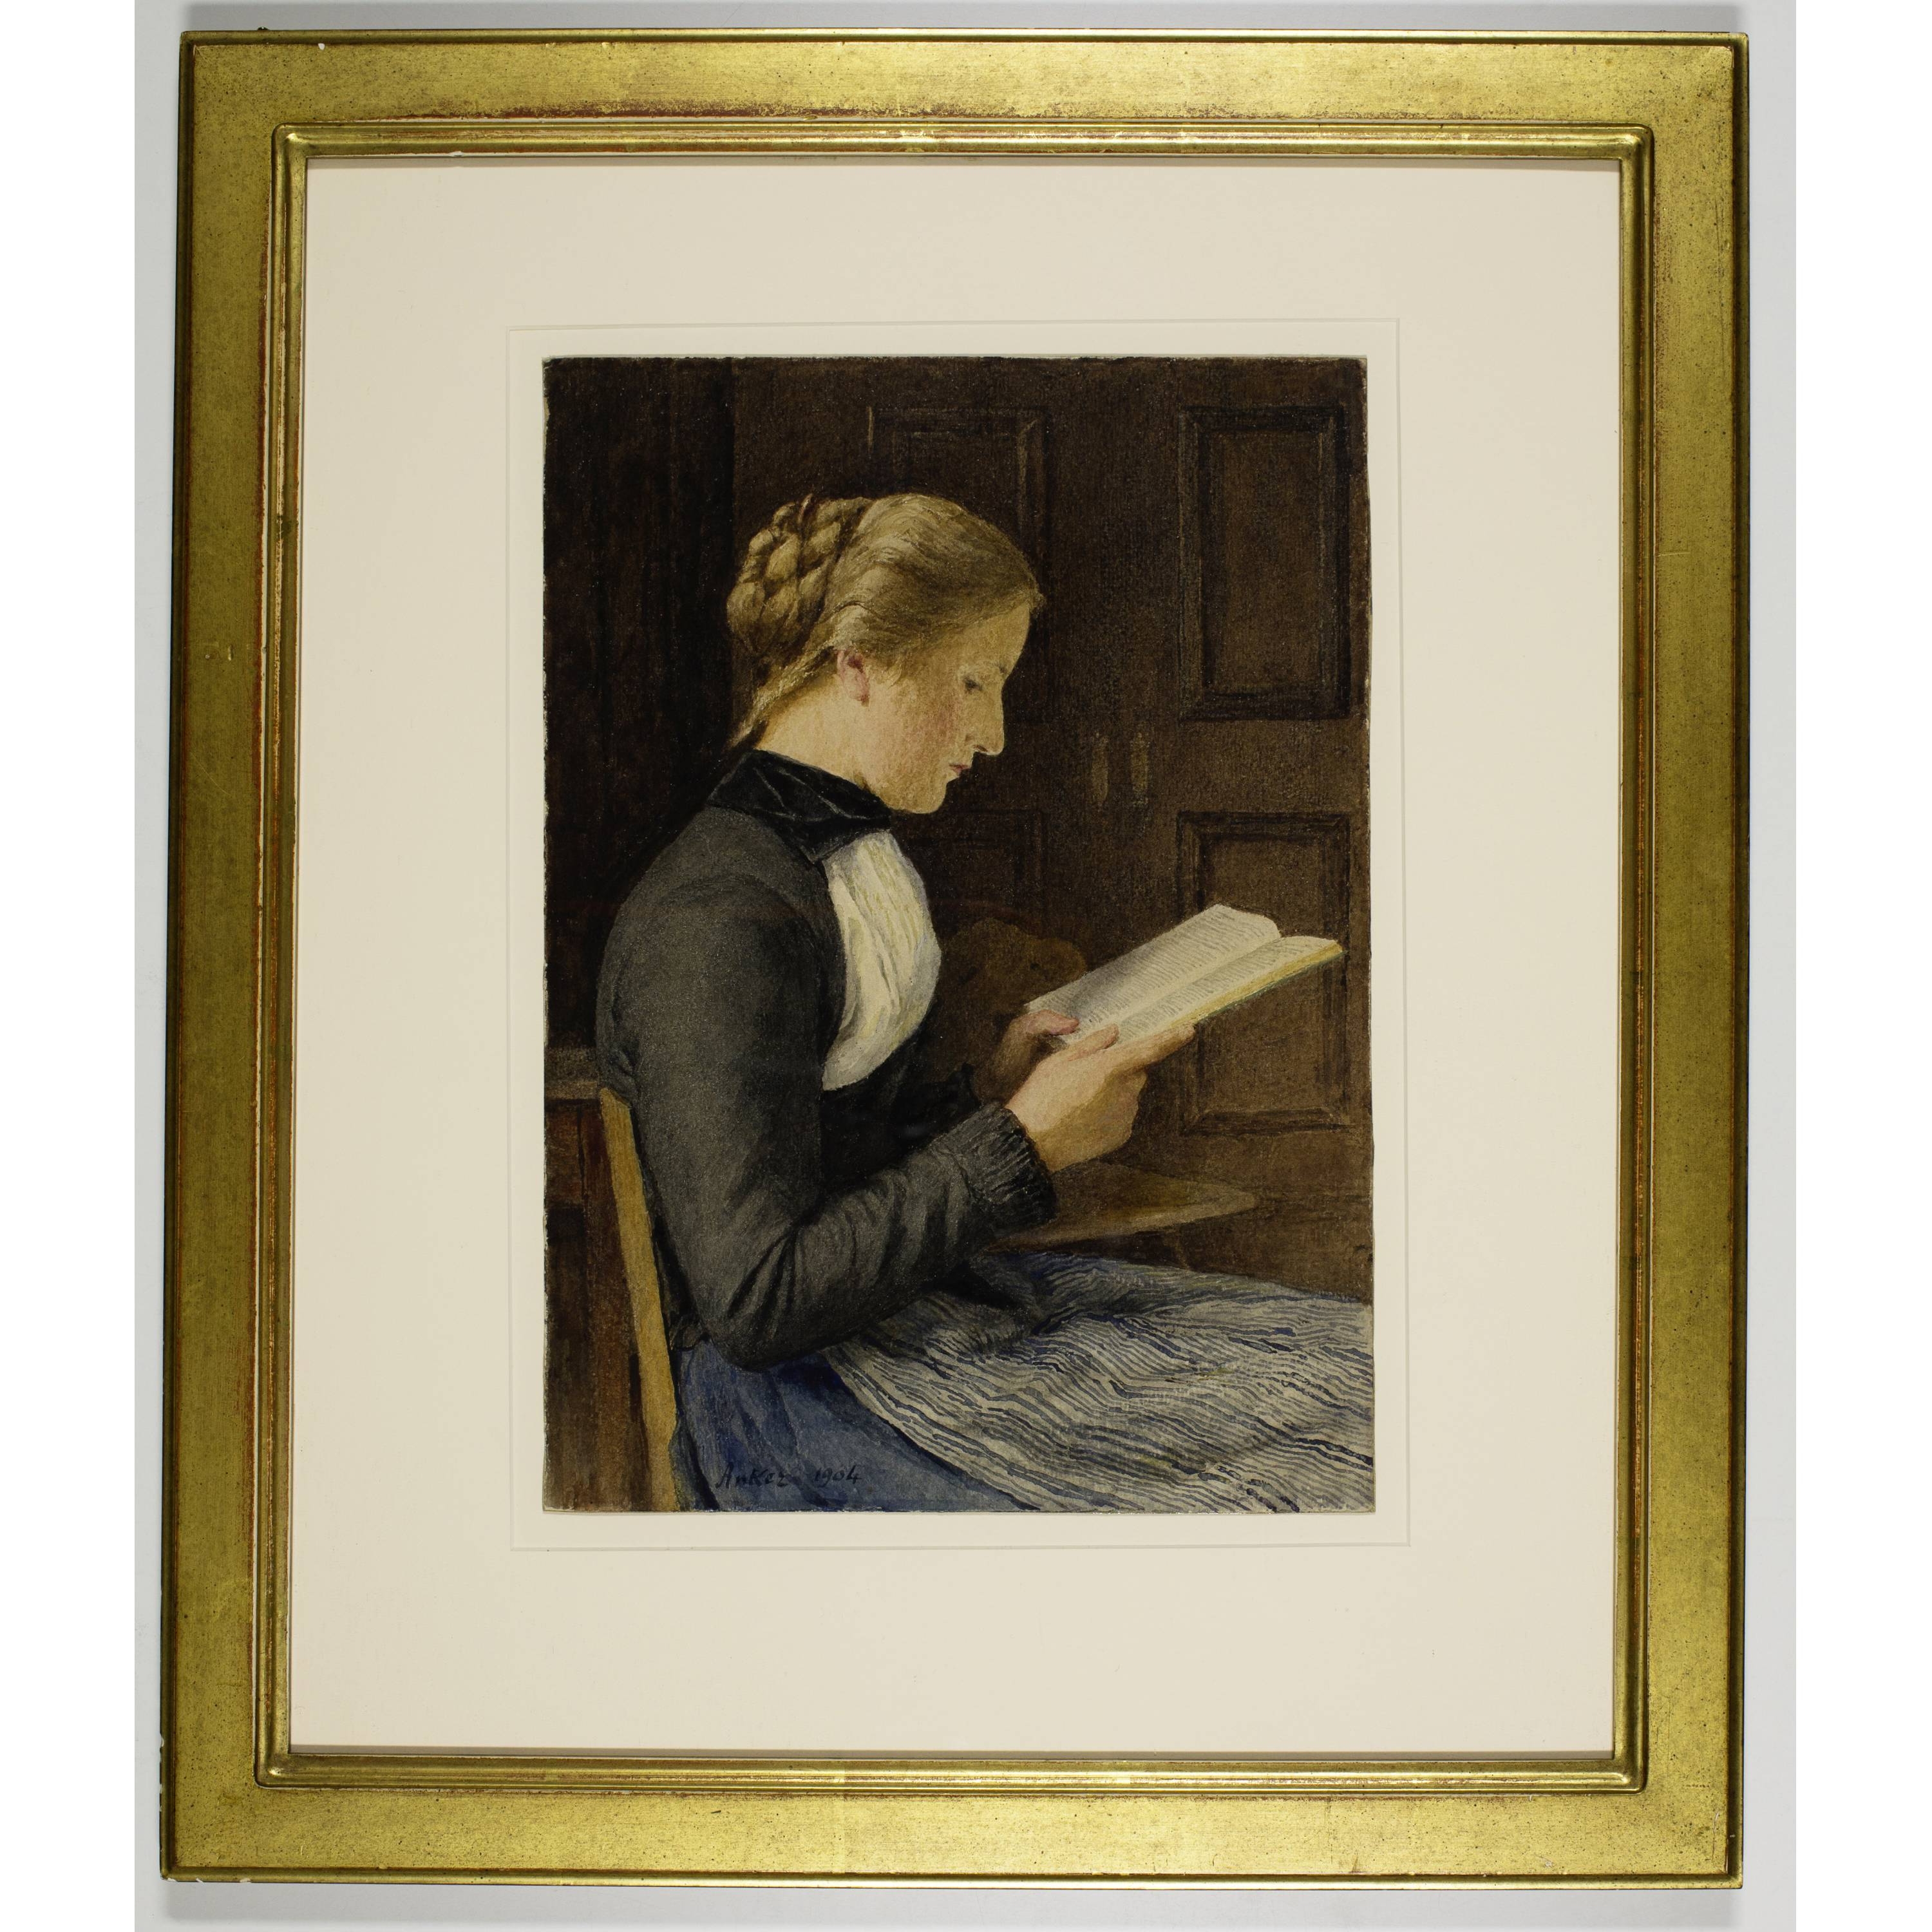 Lesende junge Frau / Lesendes Mädchen by Albert Anker, 1904